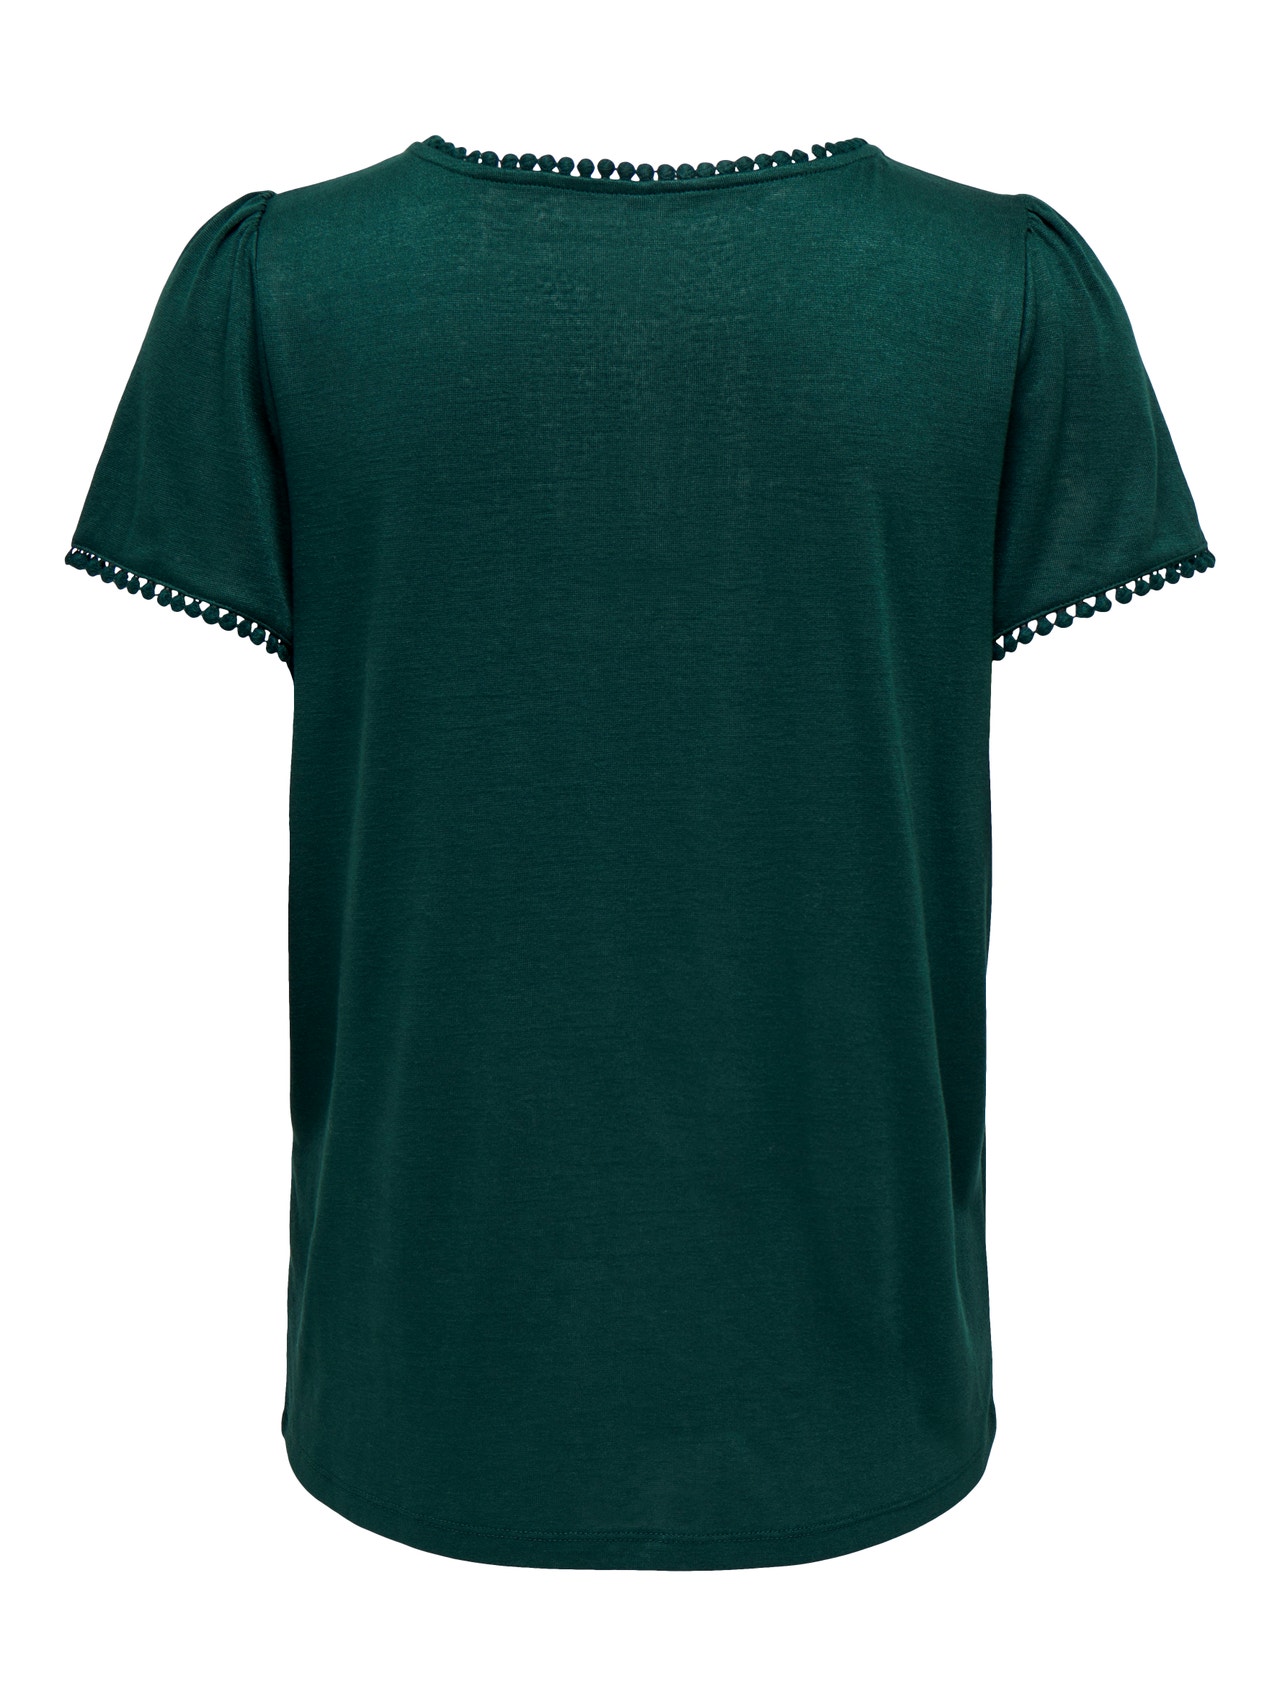 ONLY Gedetailleerd T-shirt -Ponderosa Pine - 15261217